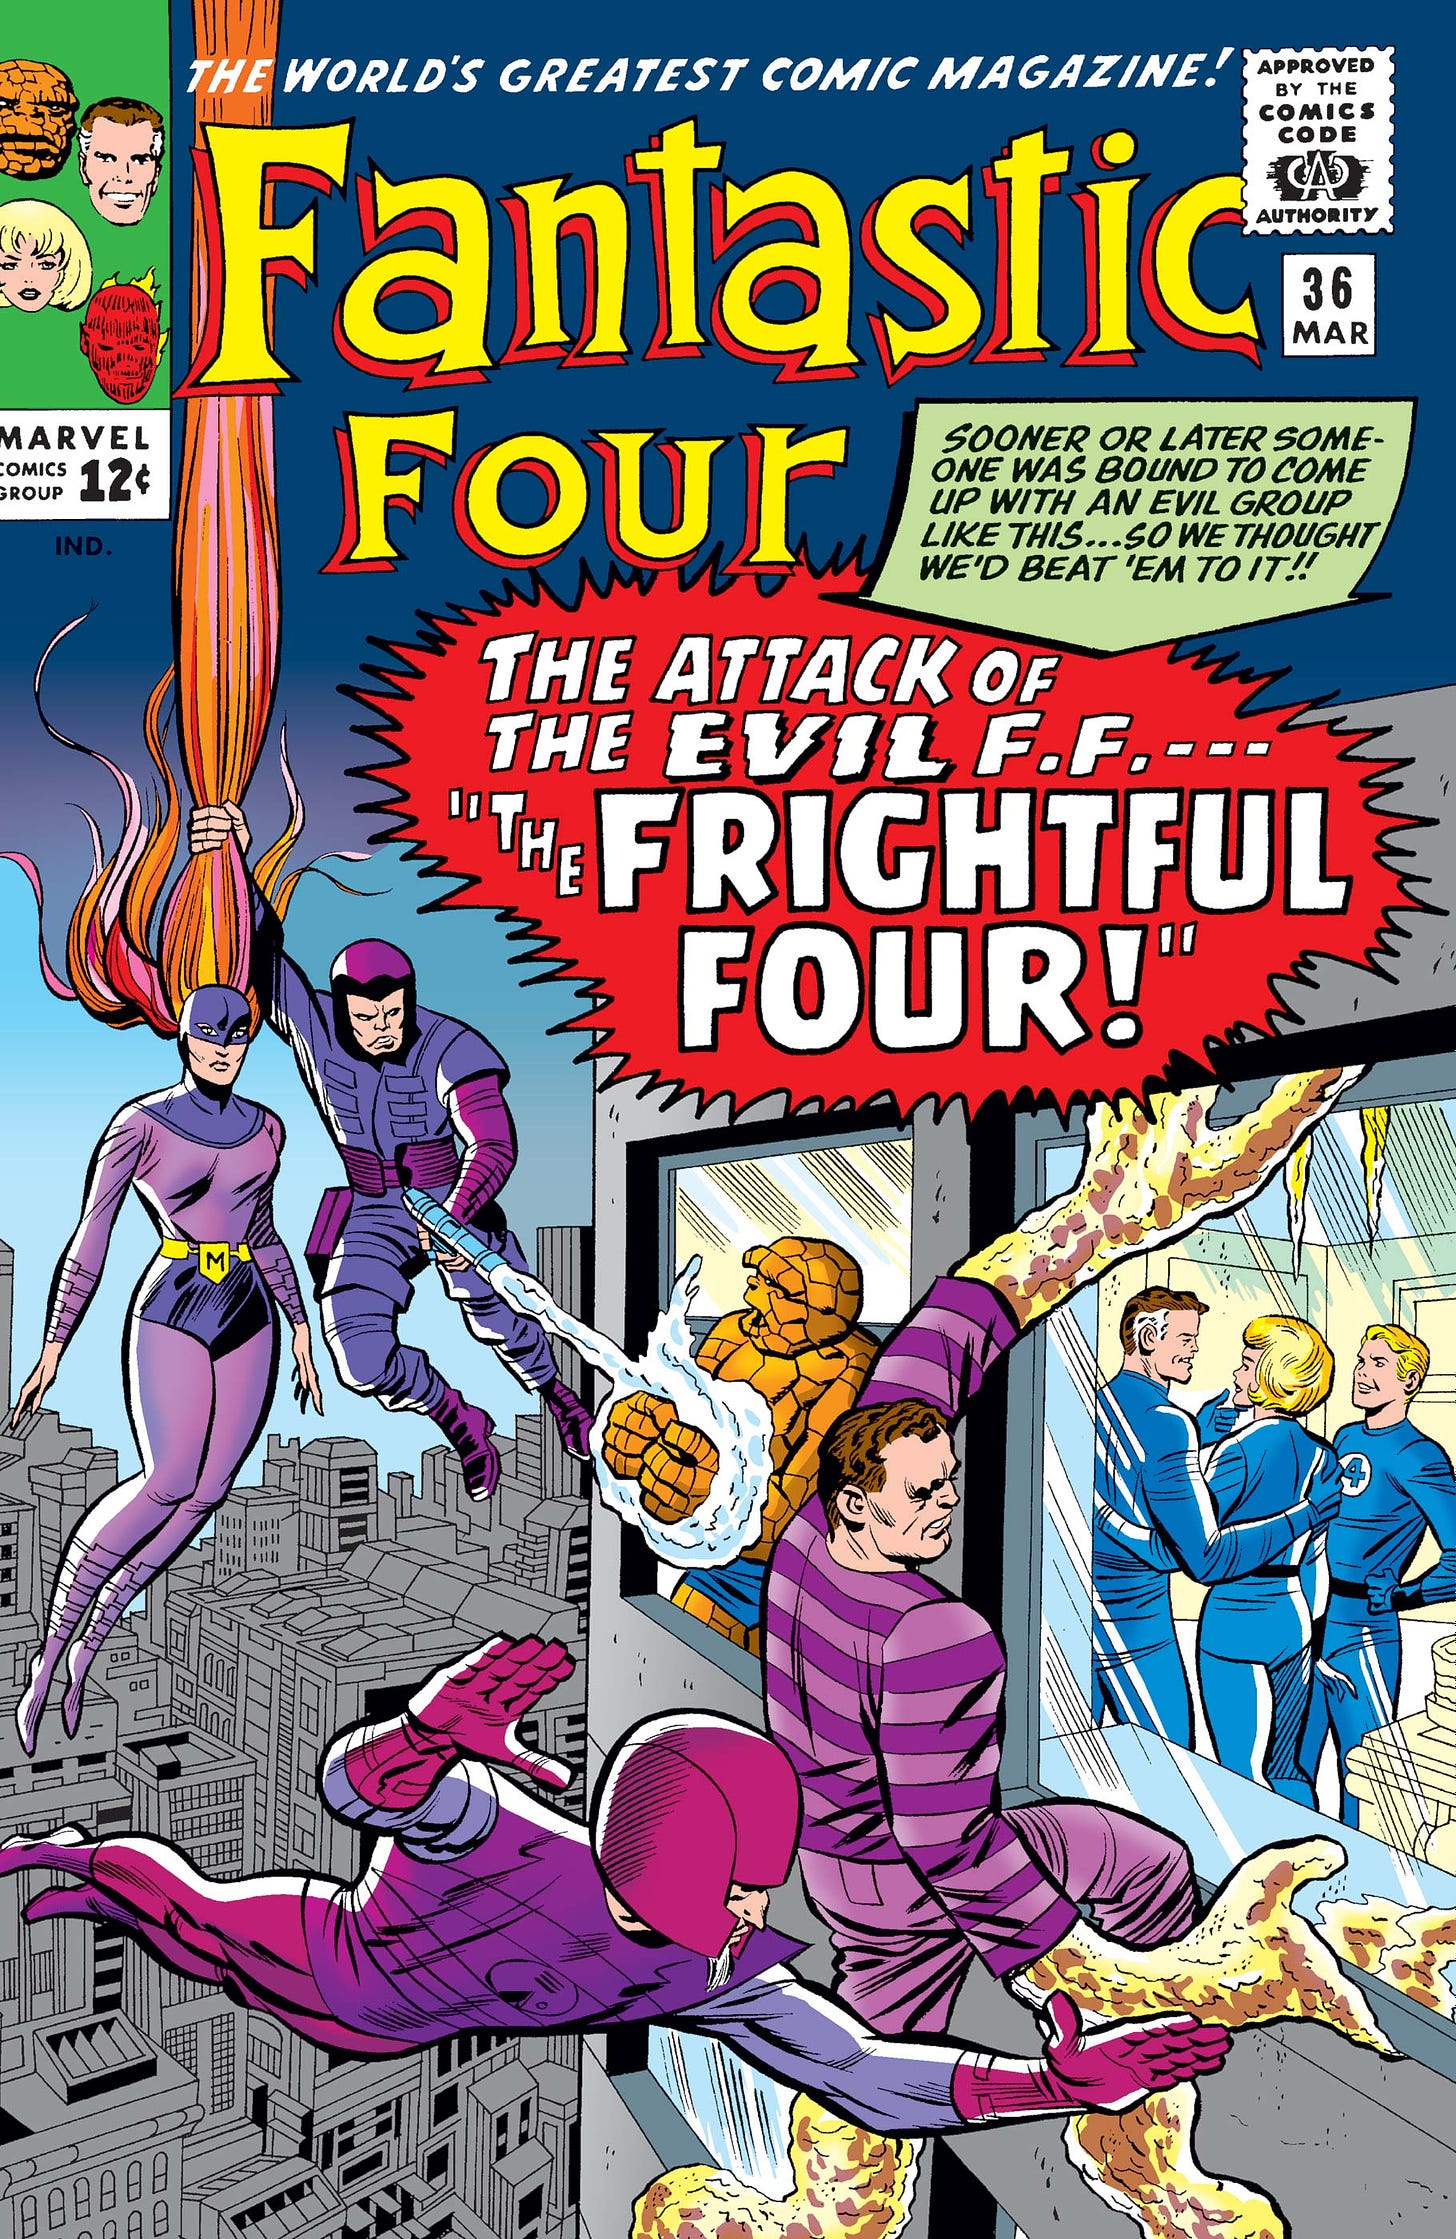 Fantastic Four (1961) #36 | Comic Issues | Marvel